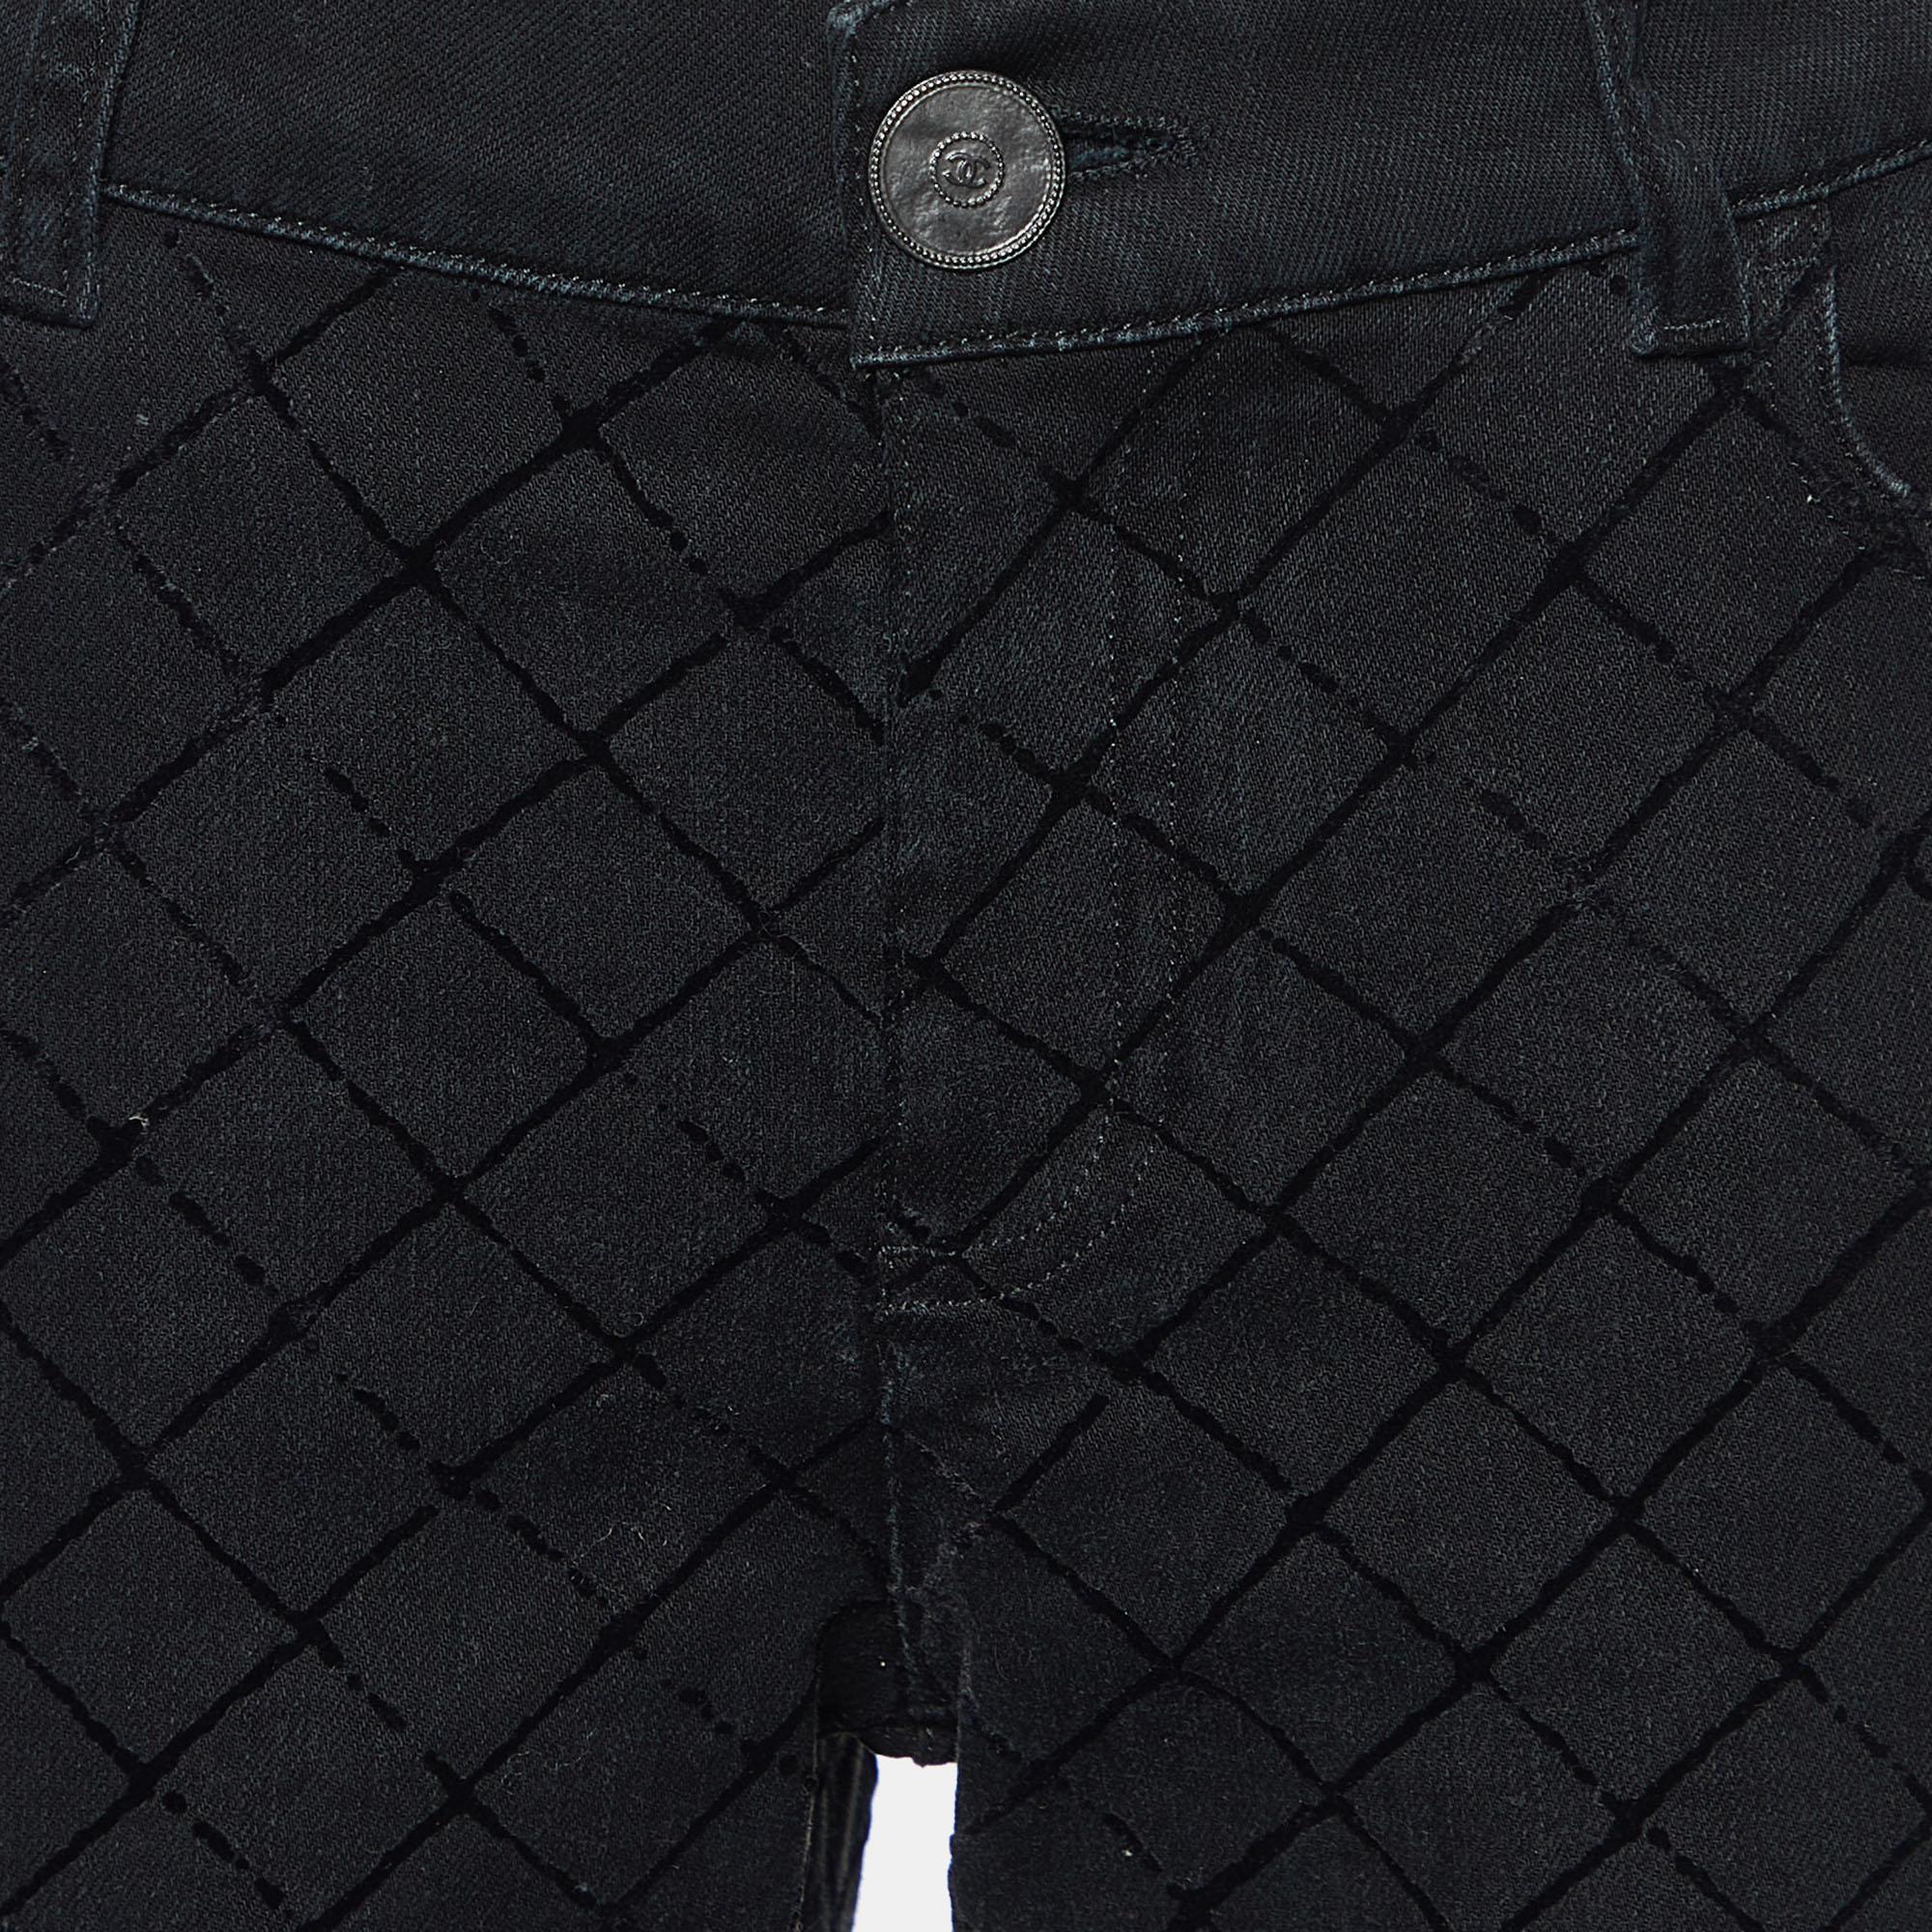 Chanel Black Flock Quilt Print Denim Slim Fit Jeans M/Waist 31